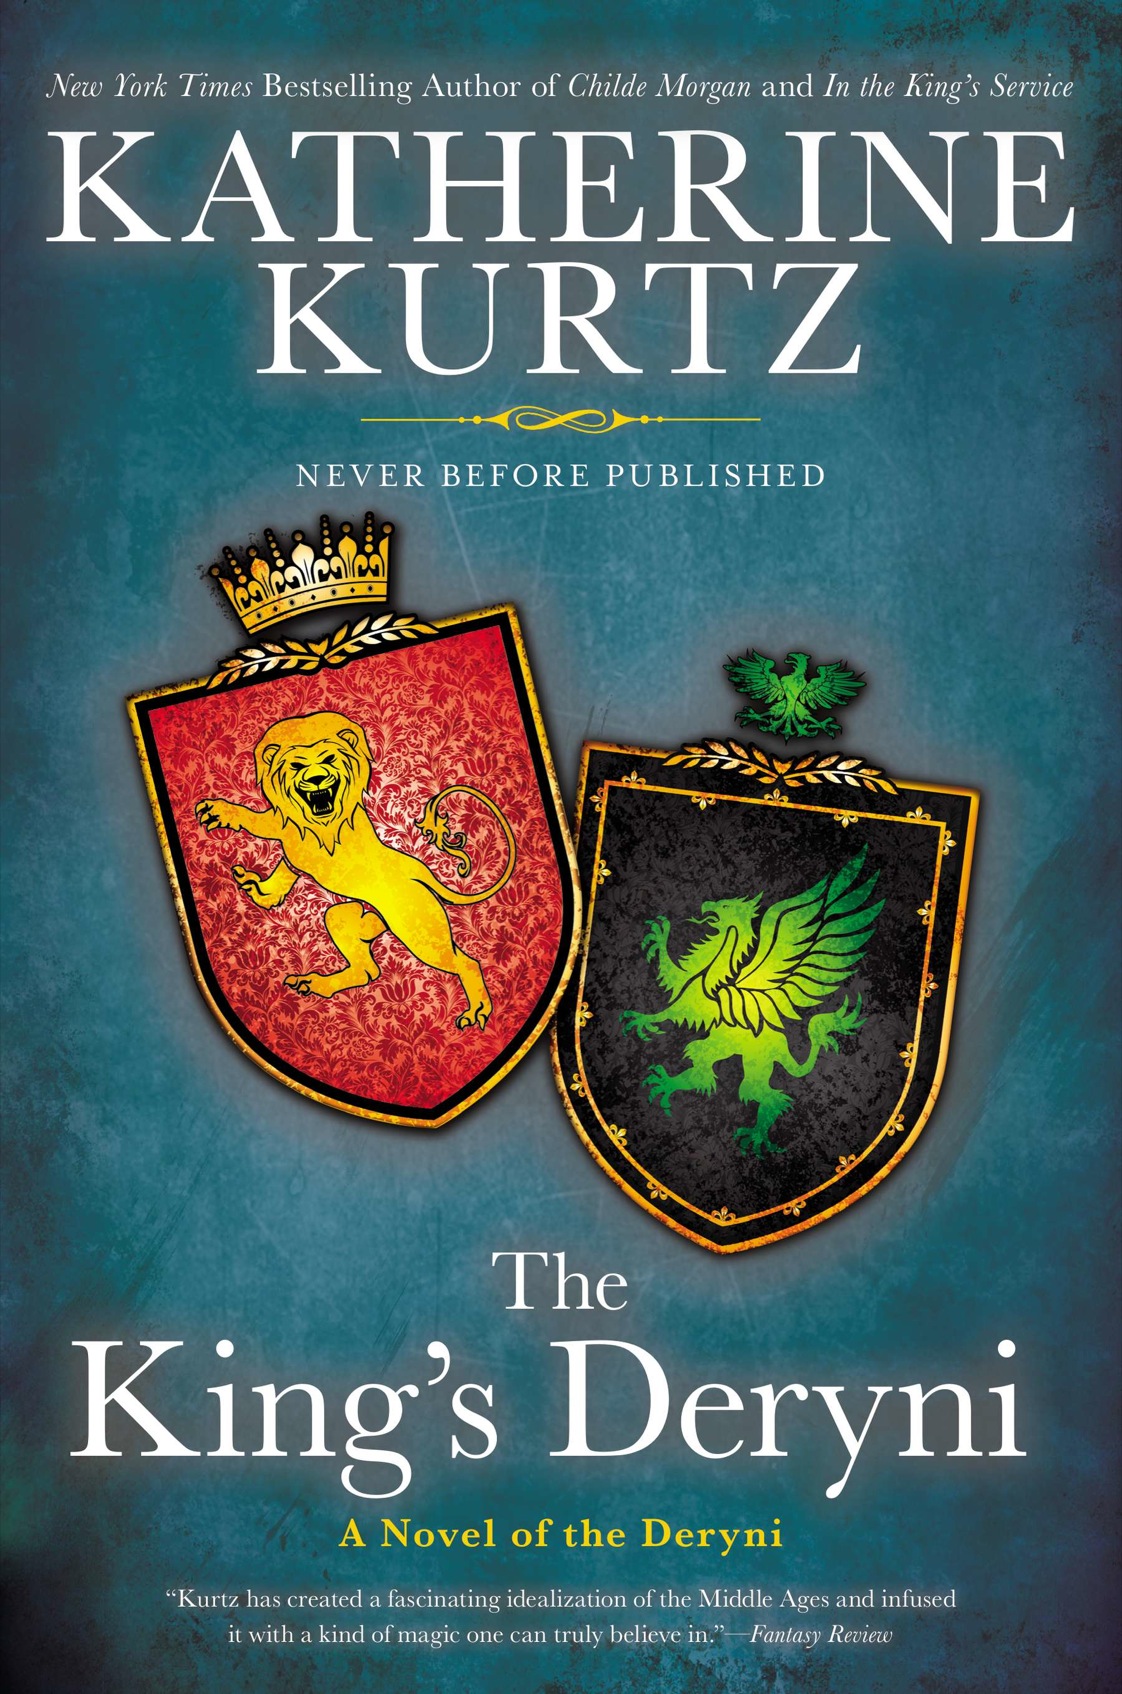 The King's Deryni (2014)